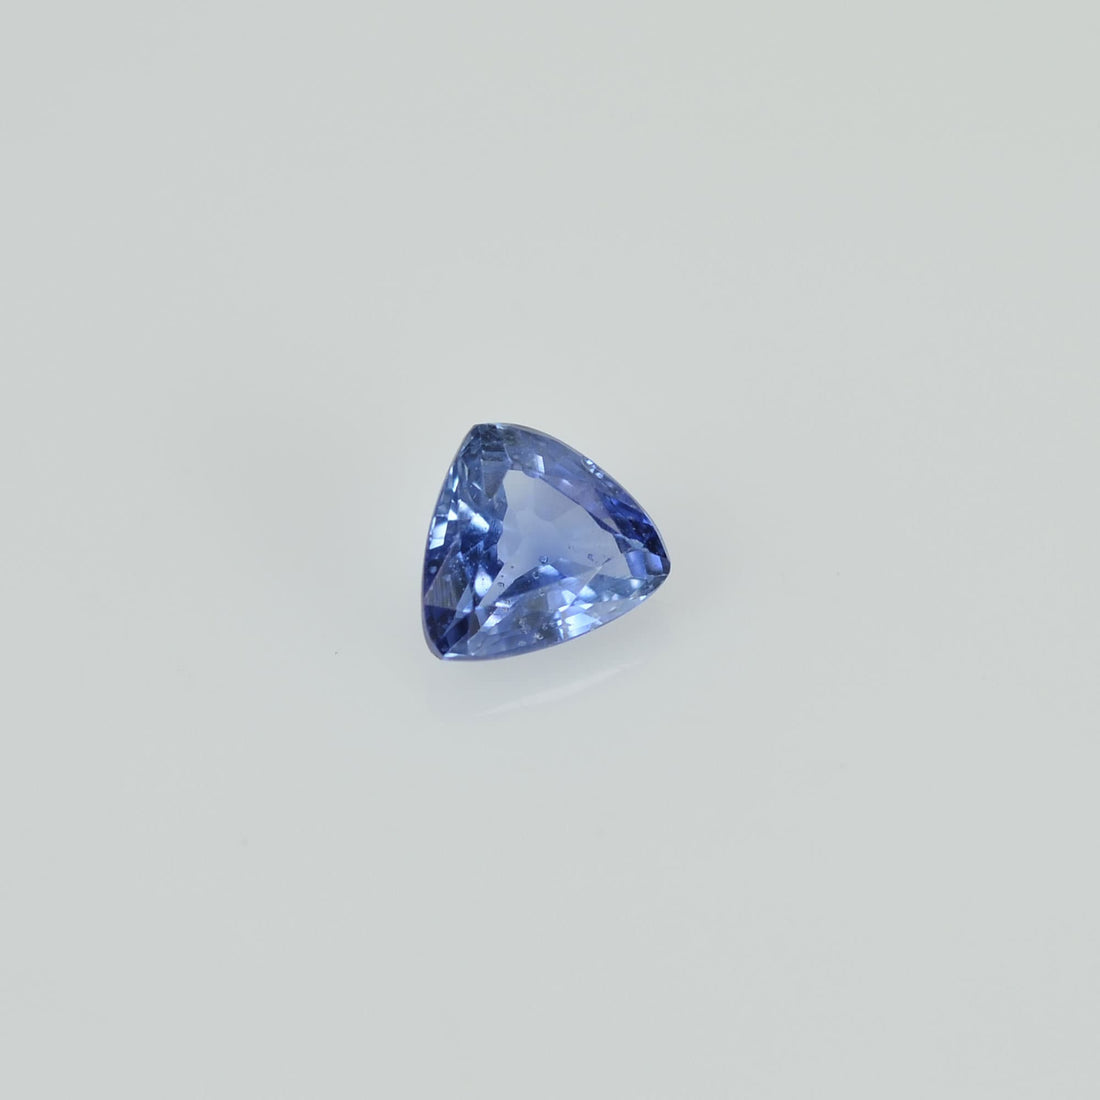 0.20 Cts Natural Blue Sapphire Loose Gemstone Trillion Cut